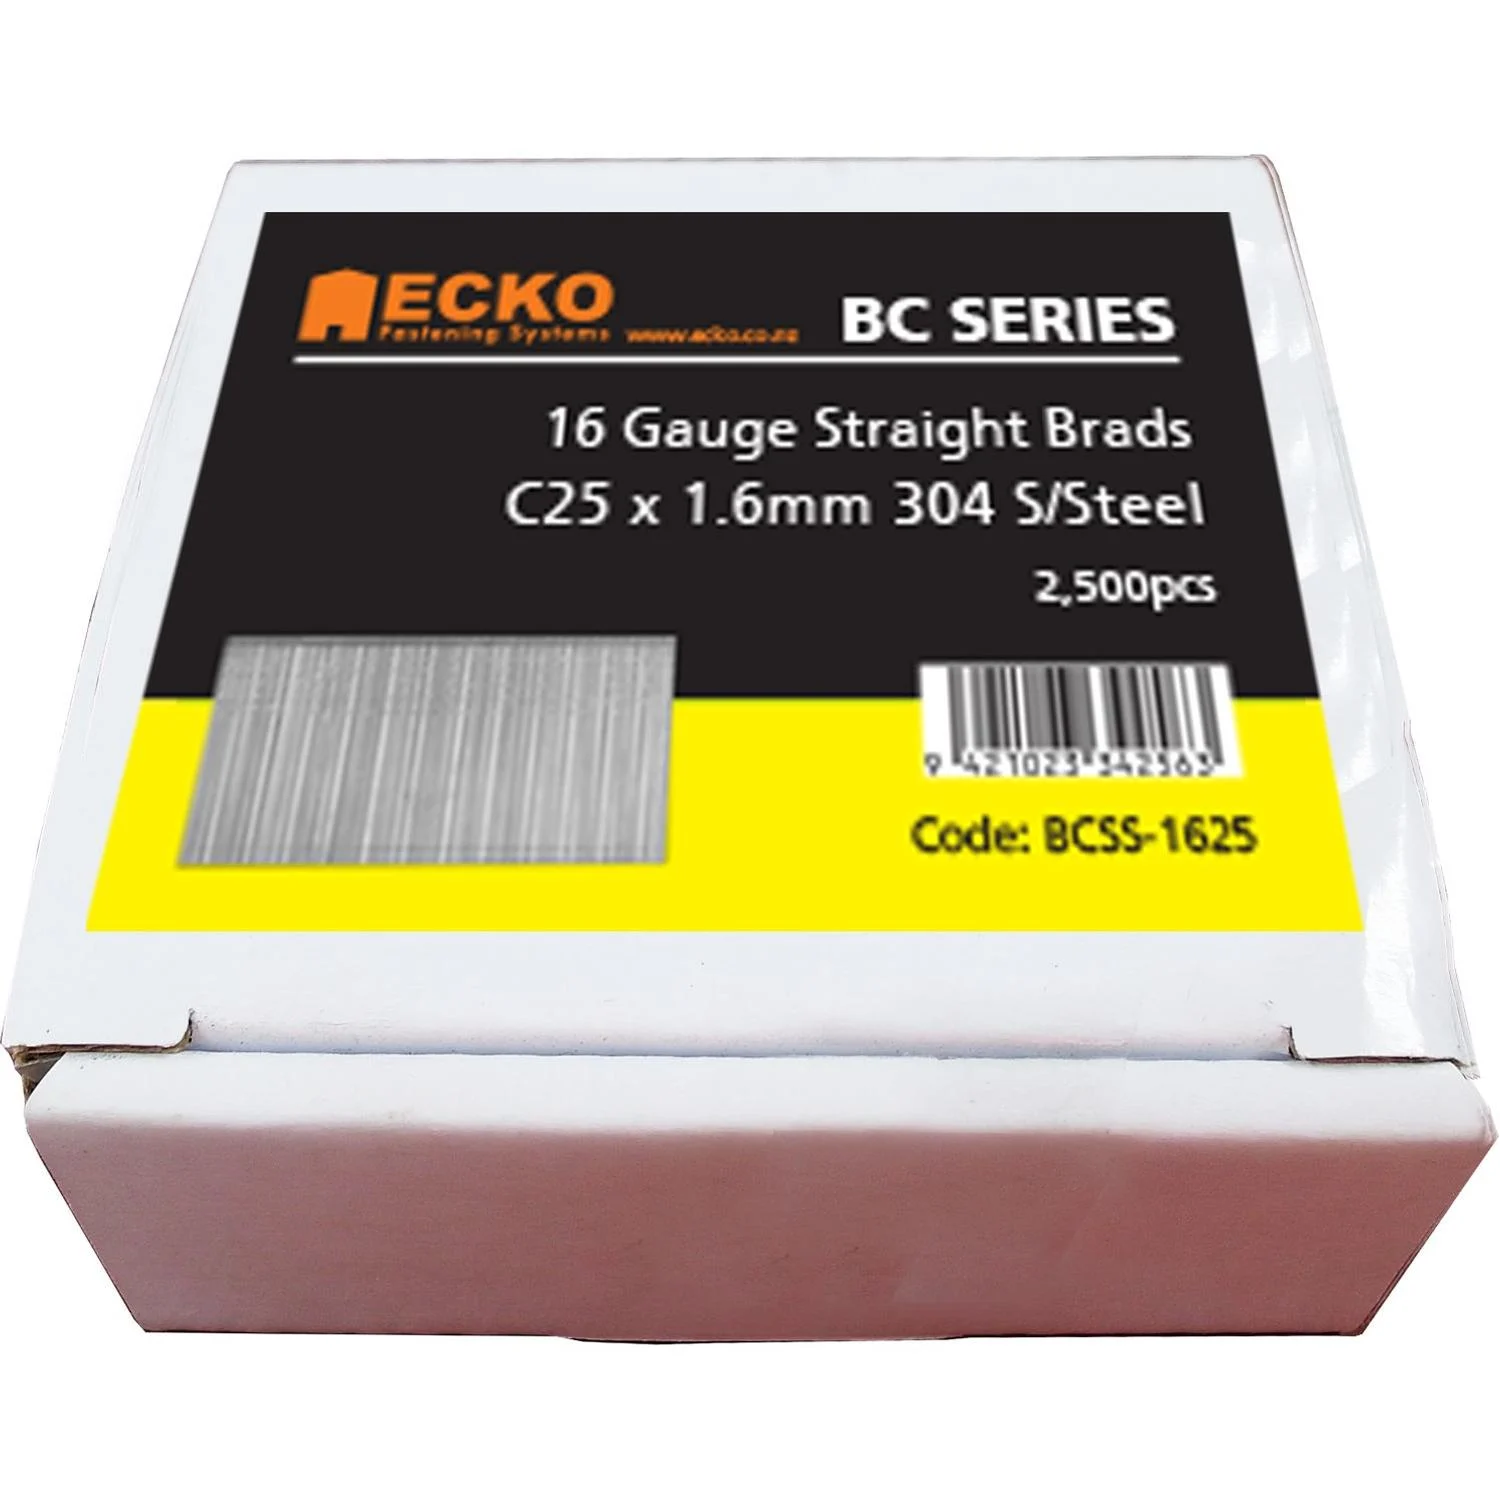 Ecko 16 Gauge Straight Brads Gasless Pack 25 X 1.6Mm 304 Stainless Steel (2500/Box)